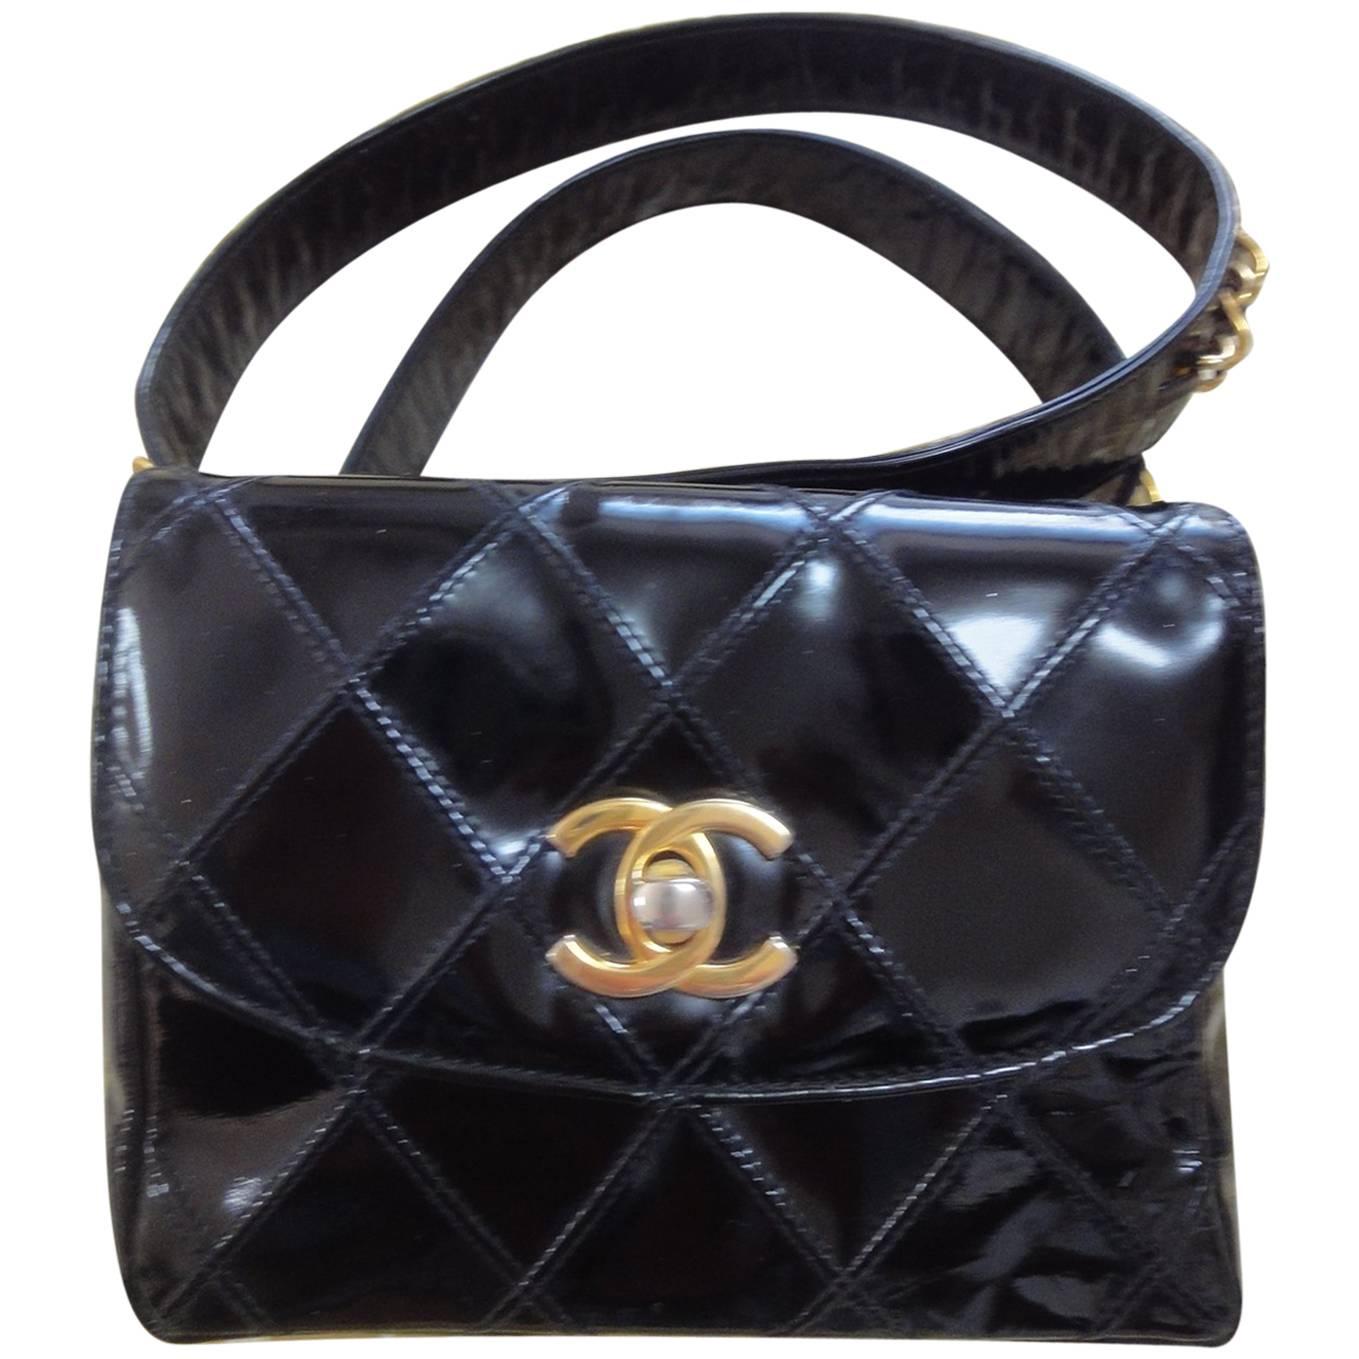 Vintage CHANEL black patent enamel waist purse, fanny pack with gold chain belt.